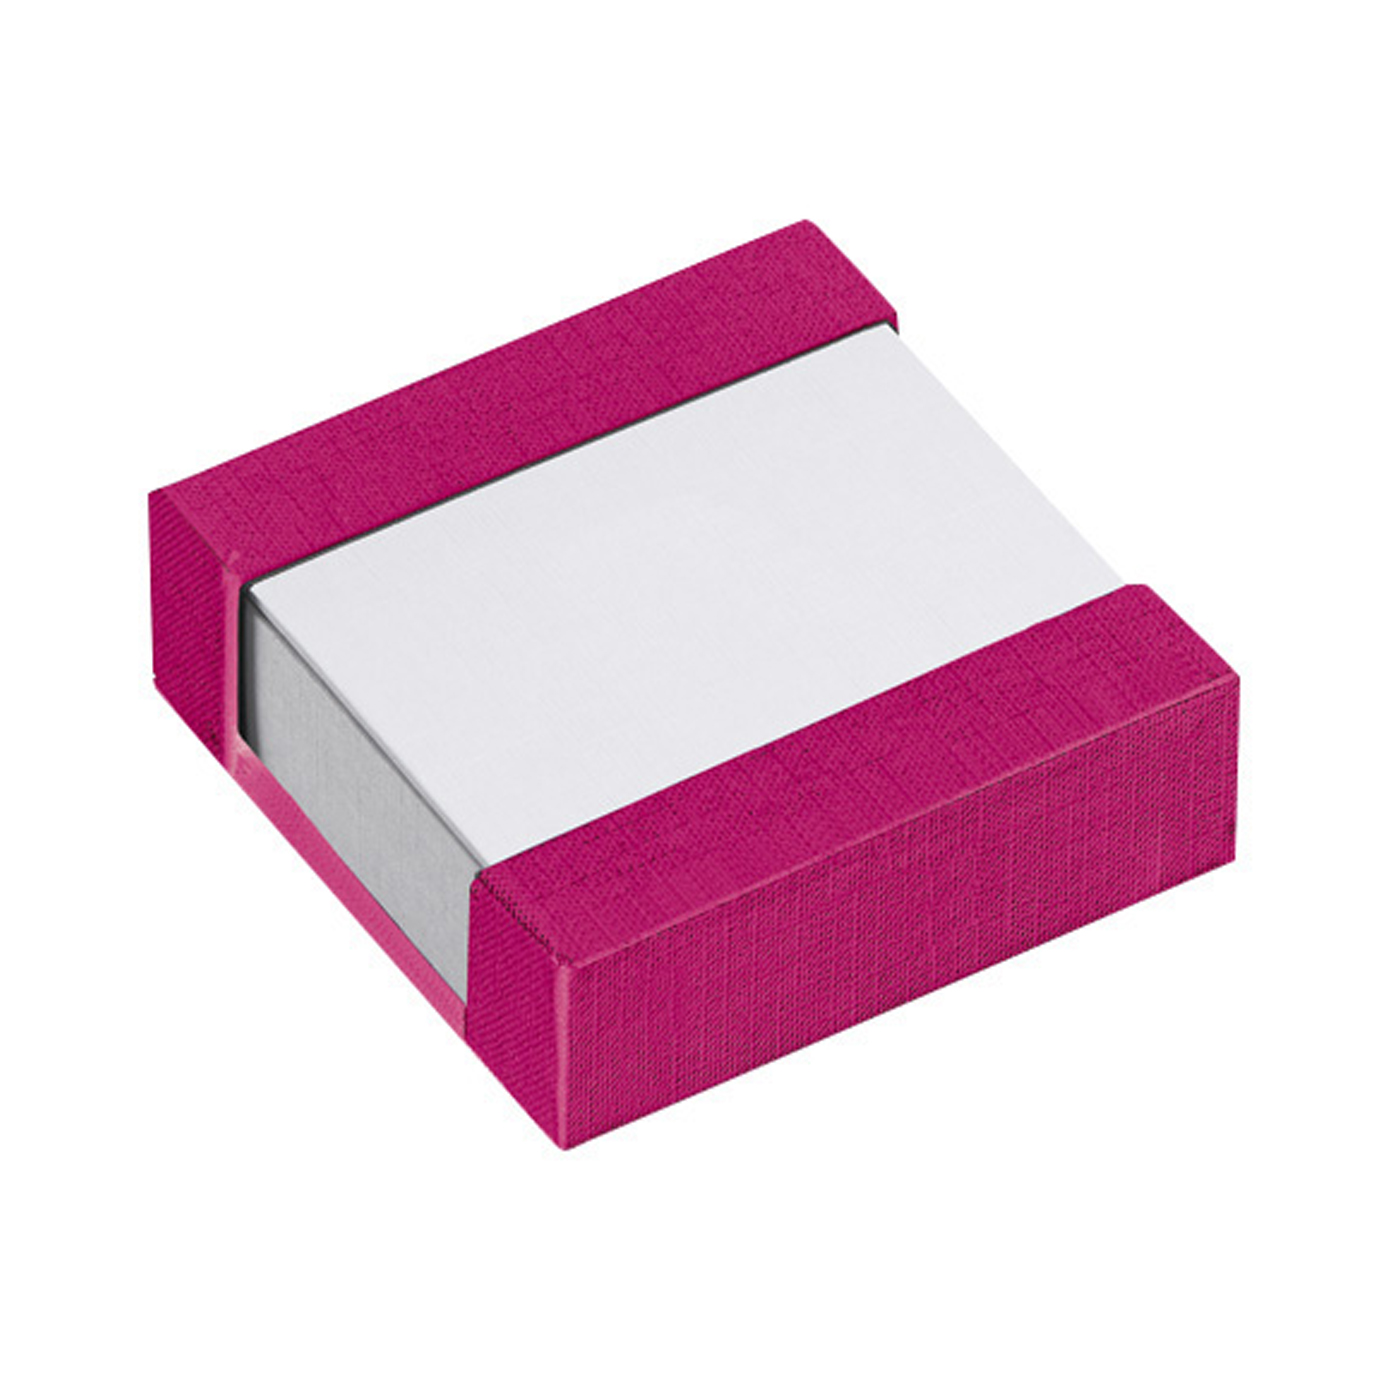 Jewellery Packaging "Claptonn", Pink-White, 78 x 78 x 22 mm - 1 piece